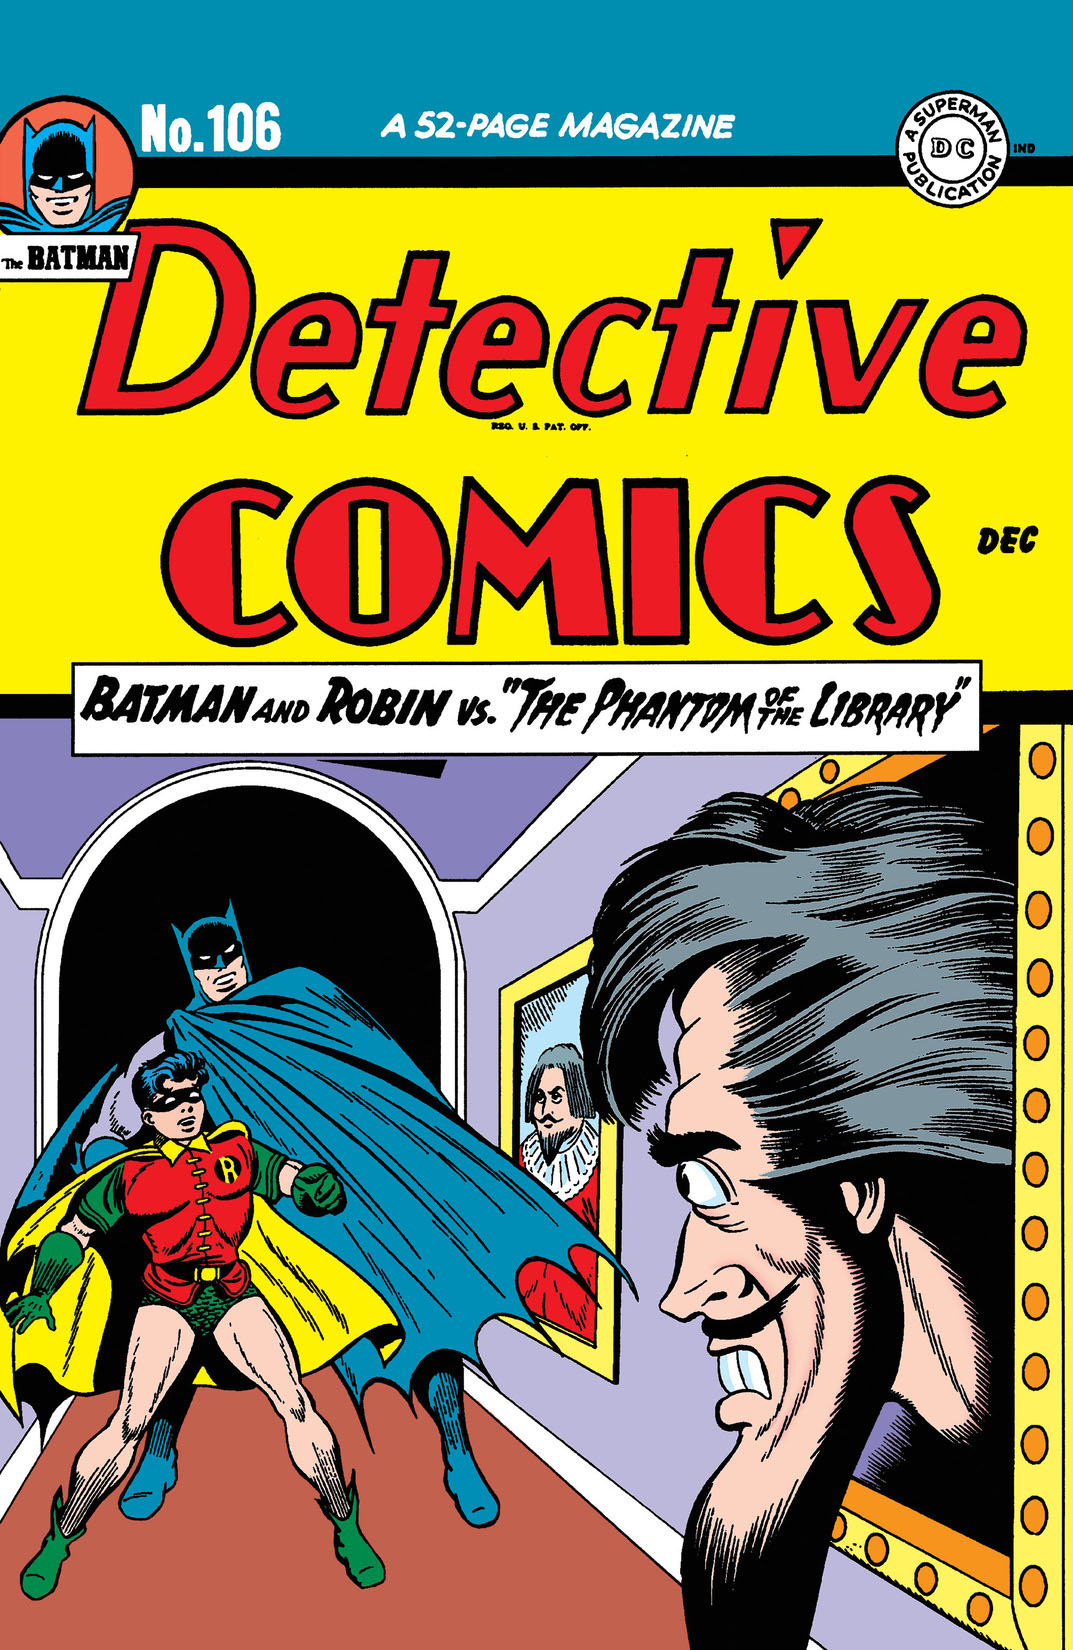 Detective Comics (1937-) #106 preview images